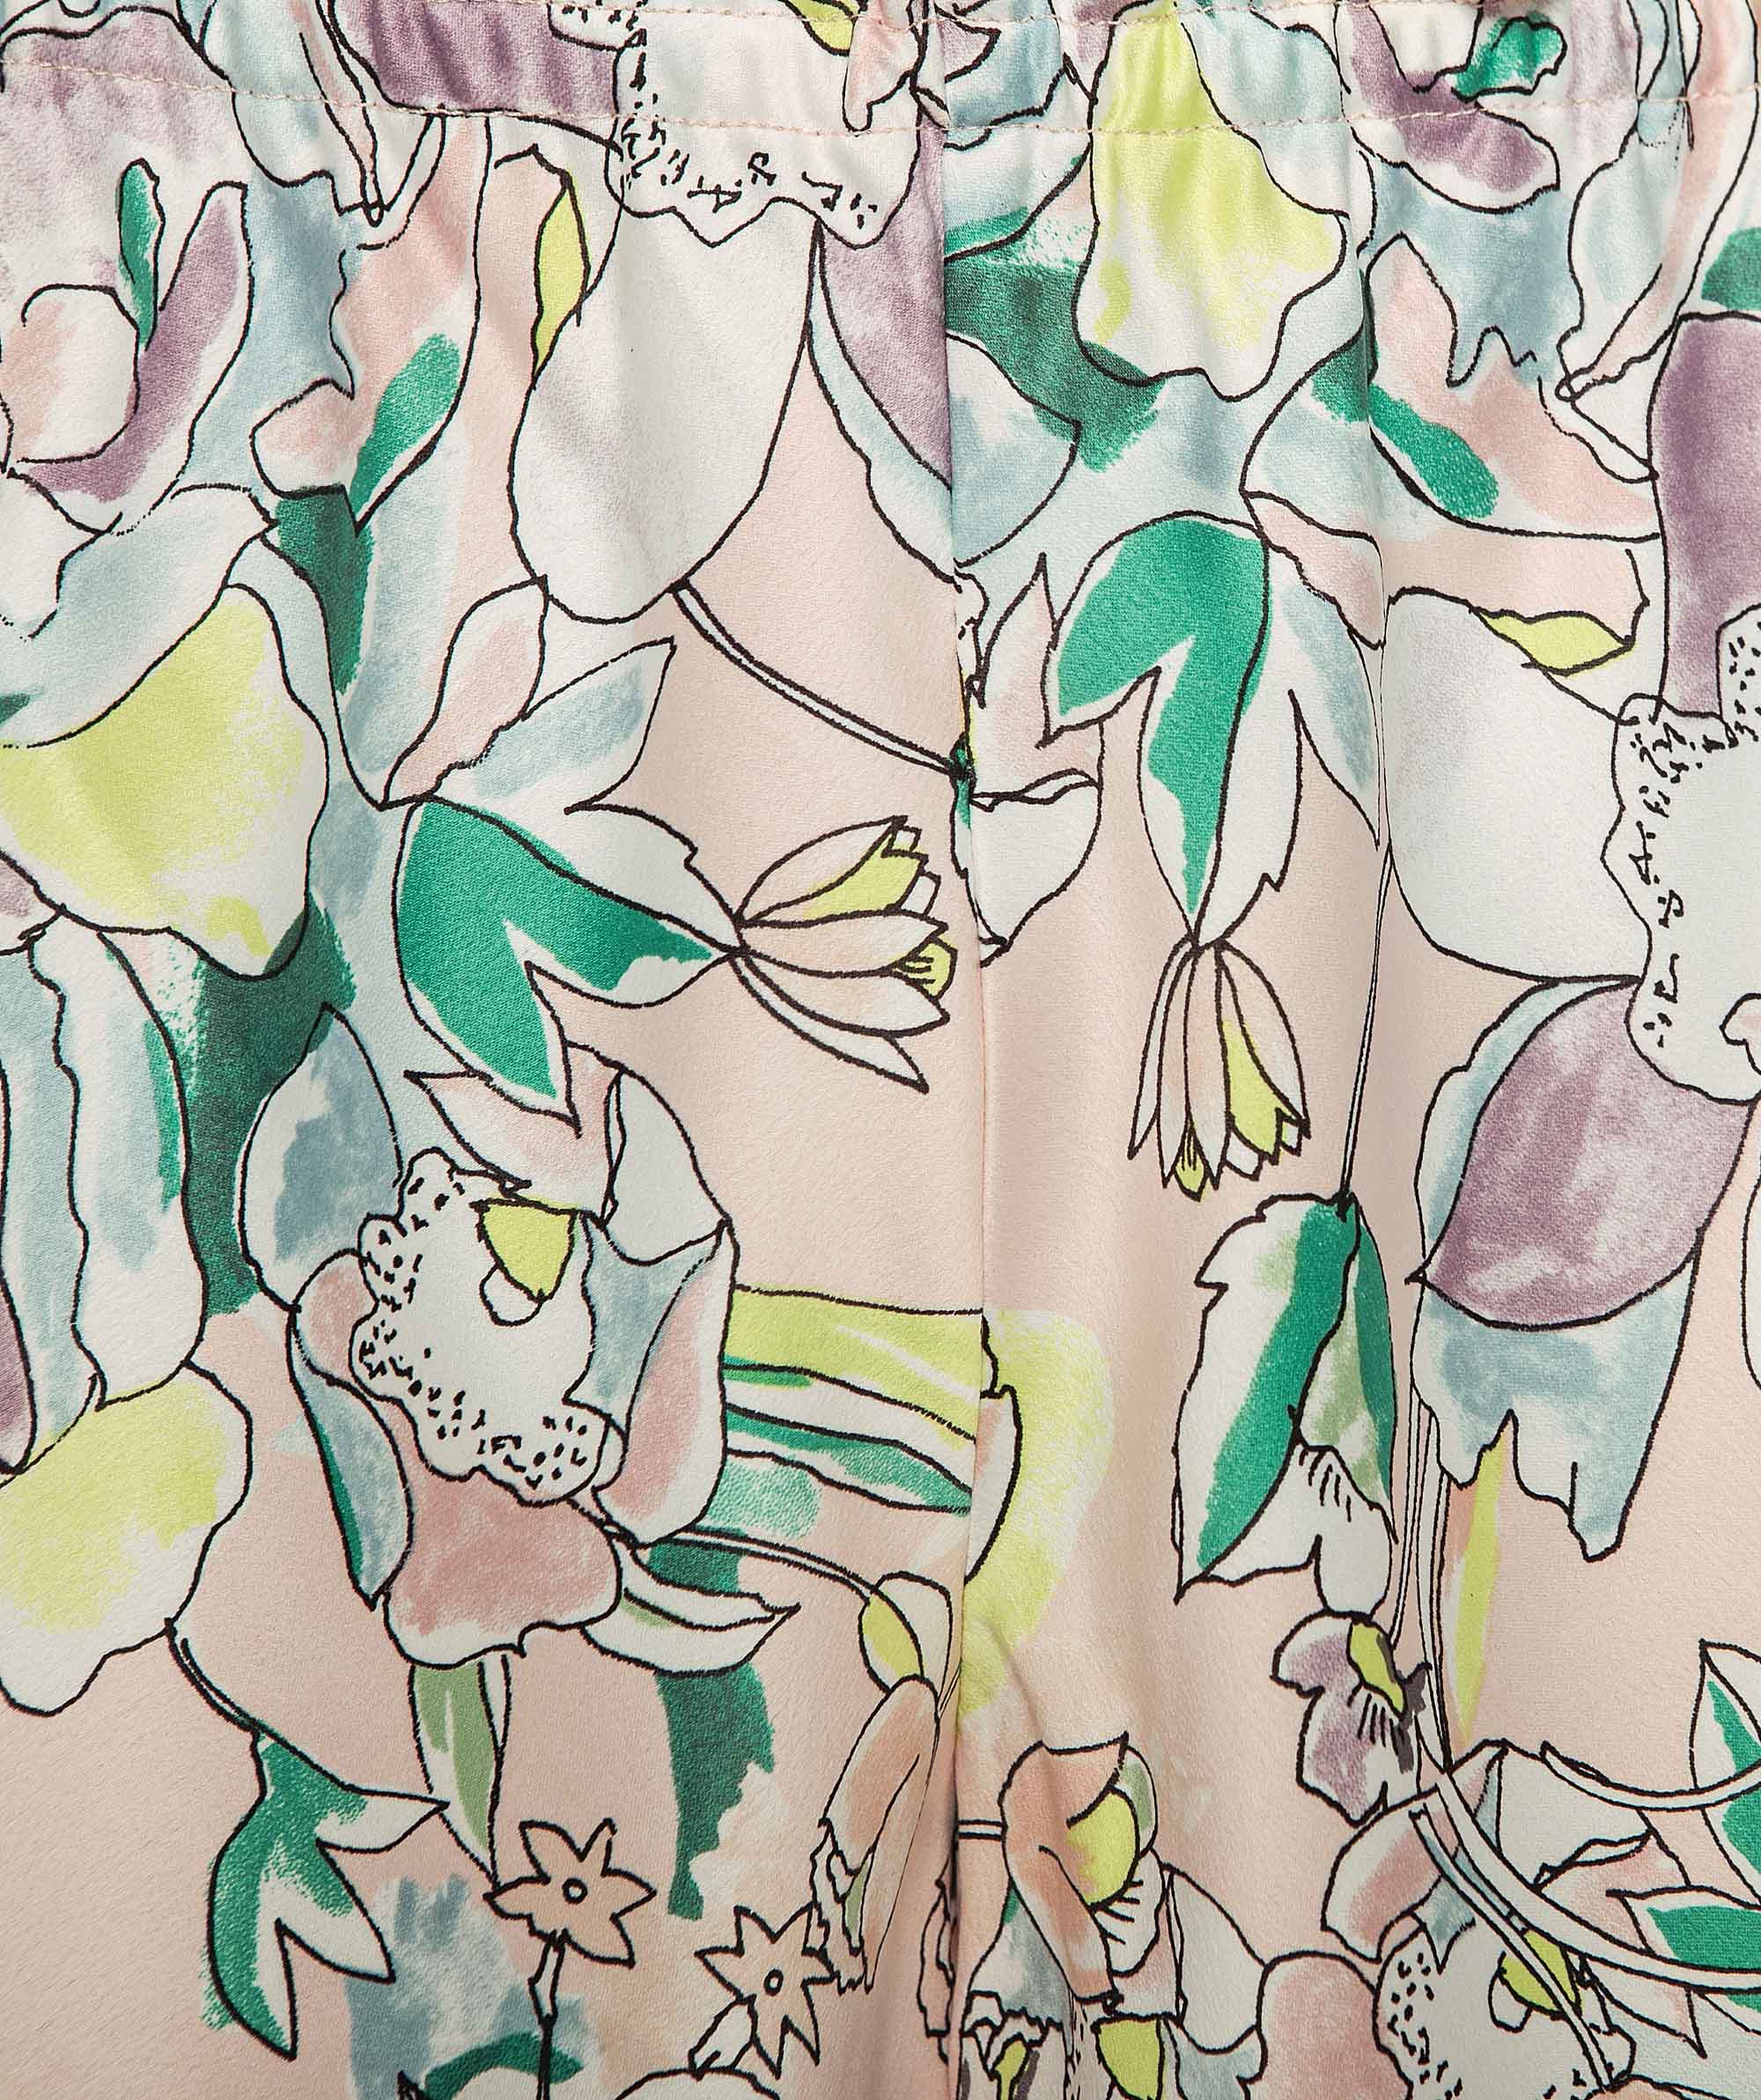 Mabel Print Shorts - Floral Print